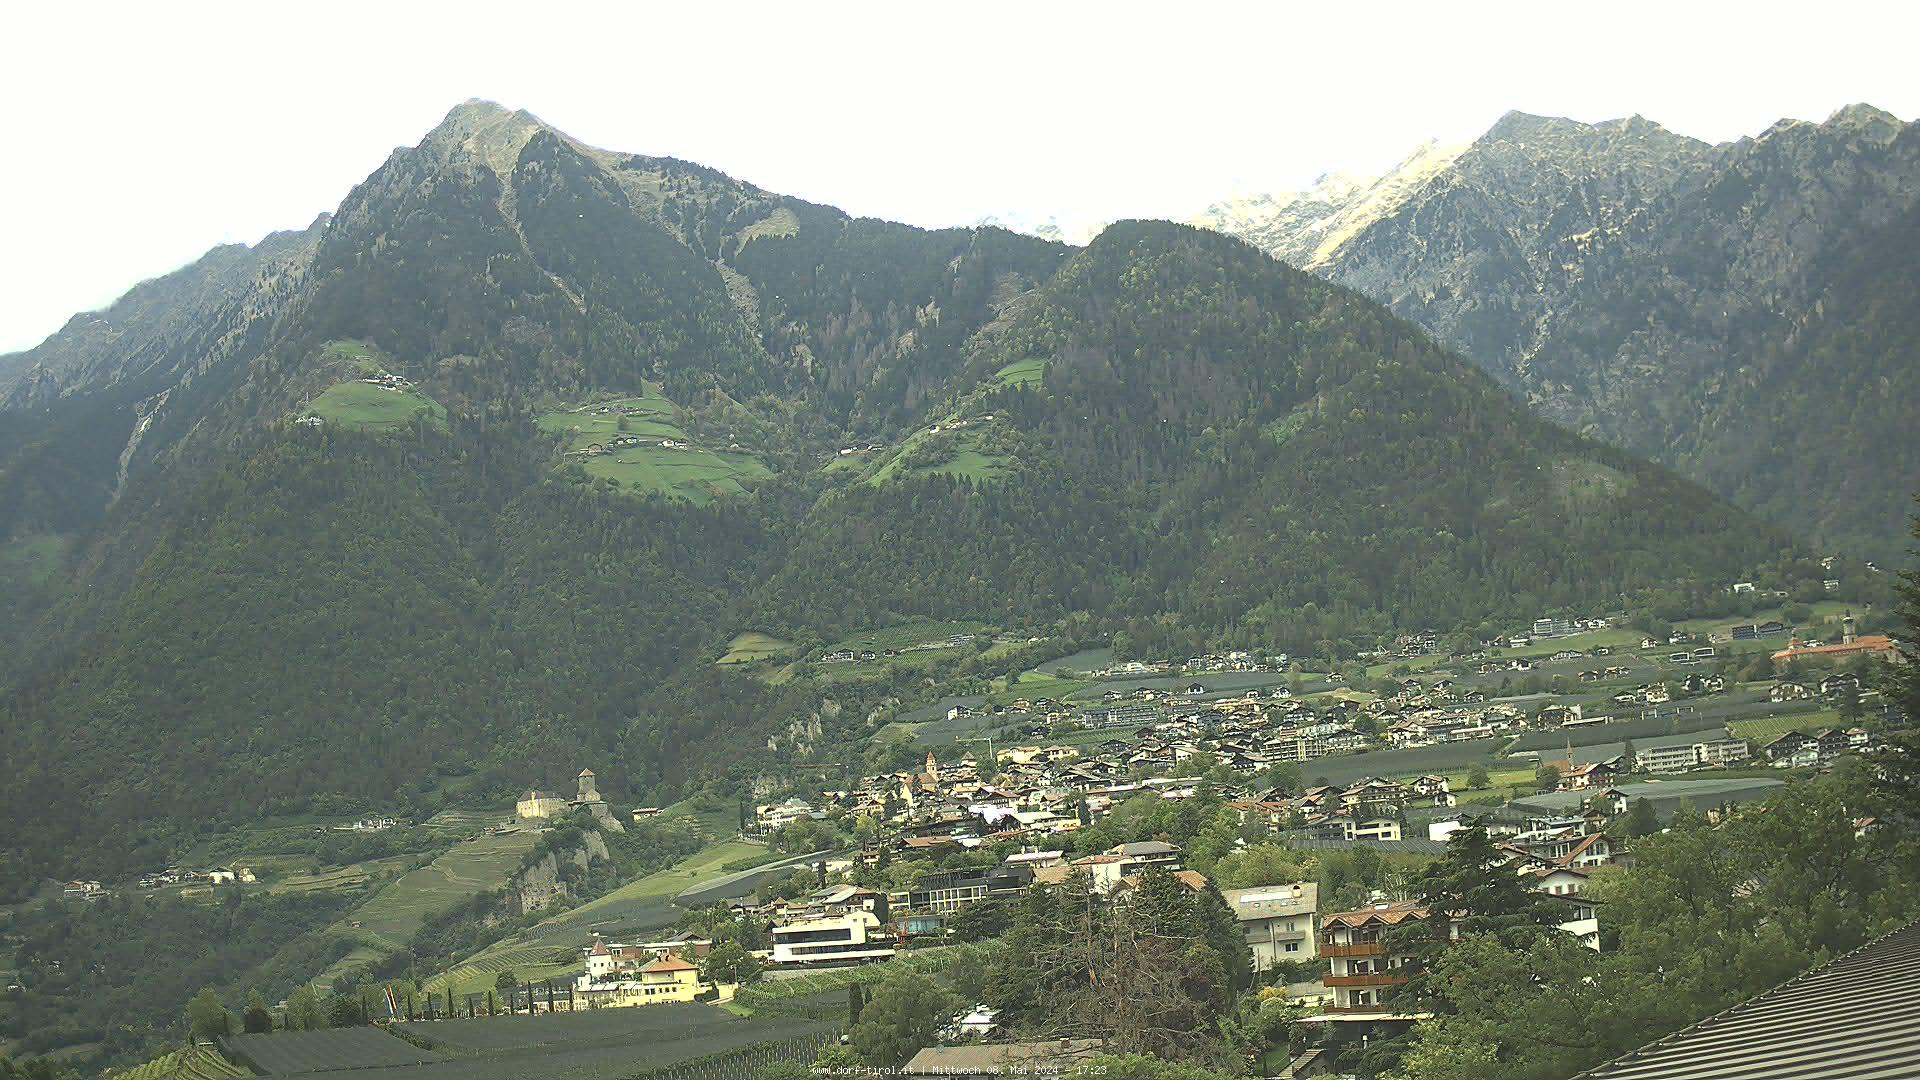 Dorf Tirol